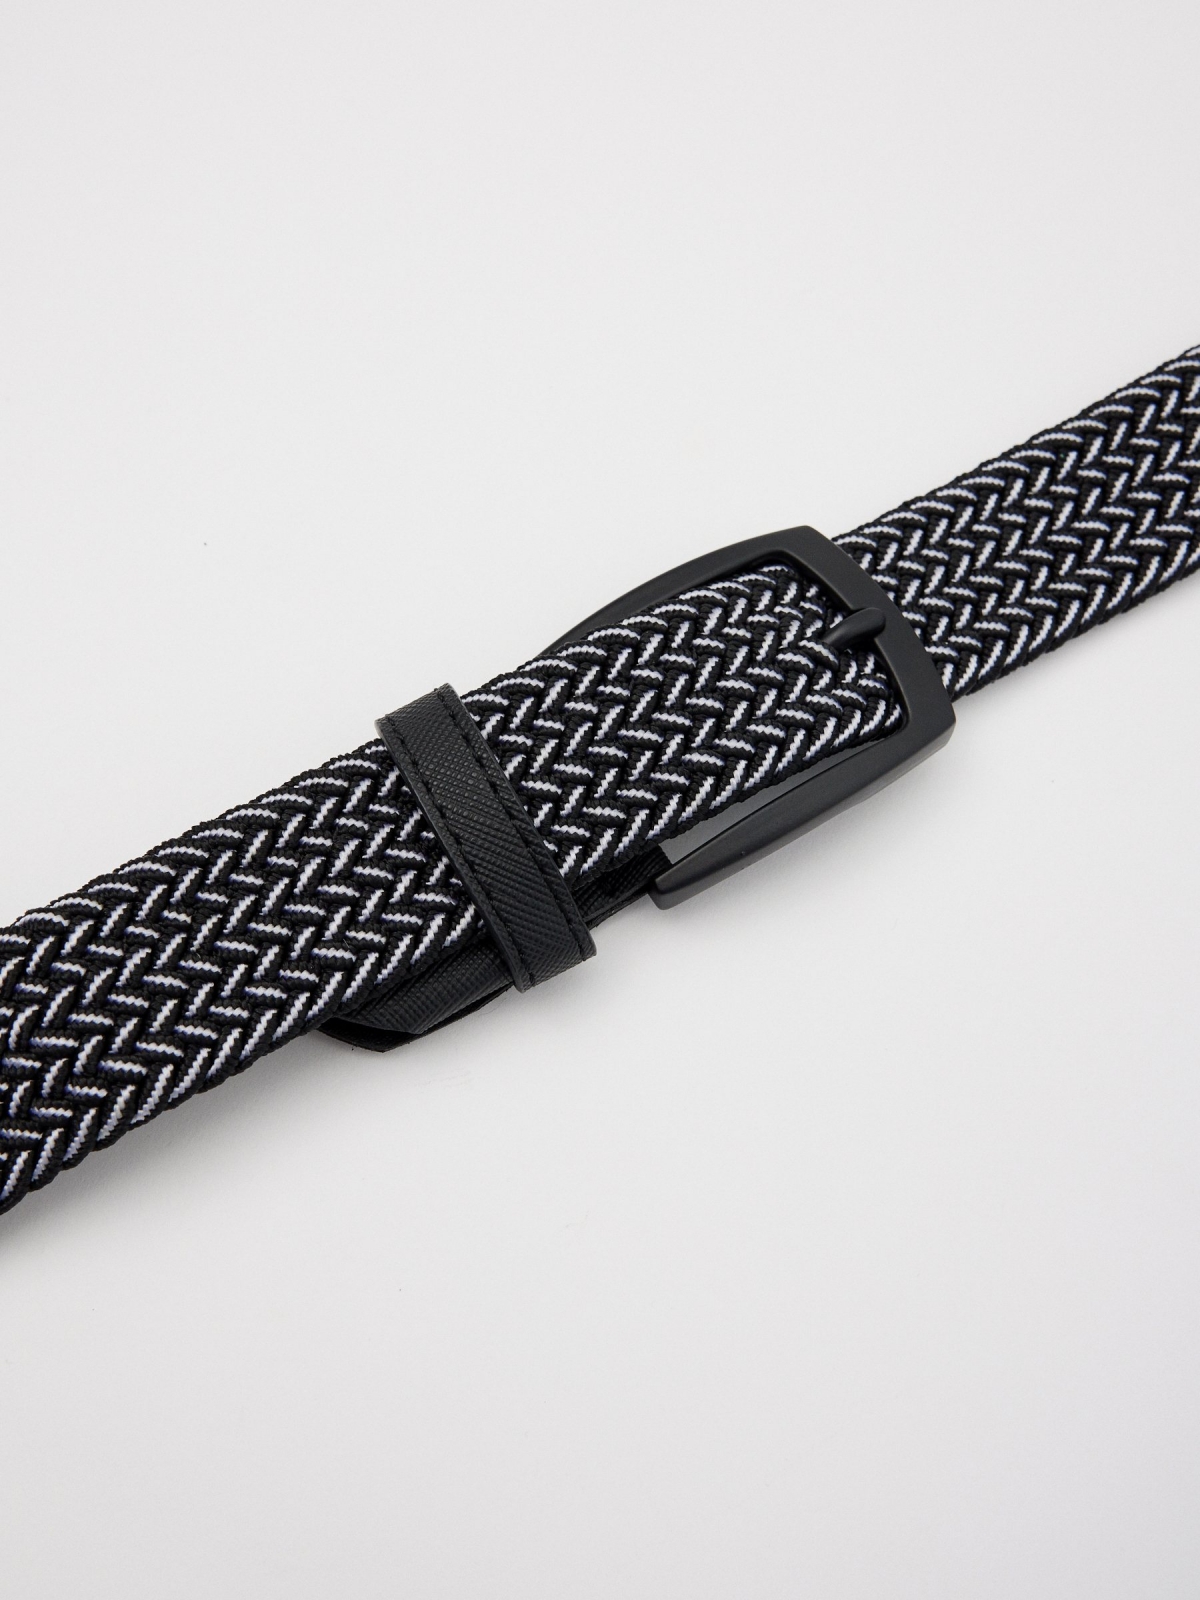 Elastic braided belt detail view